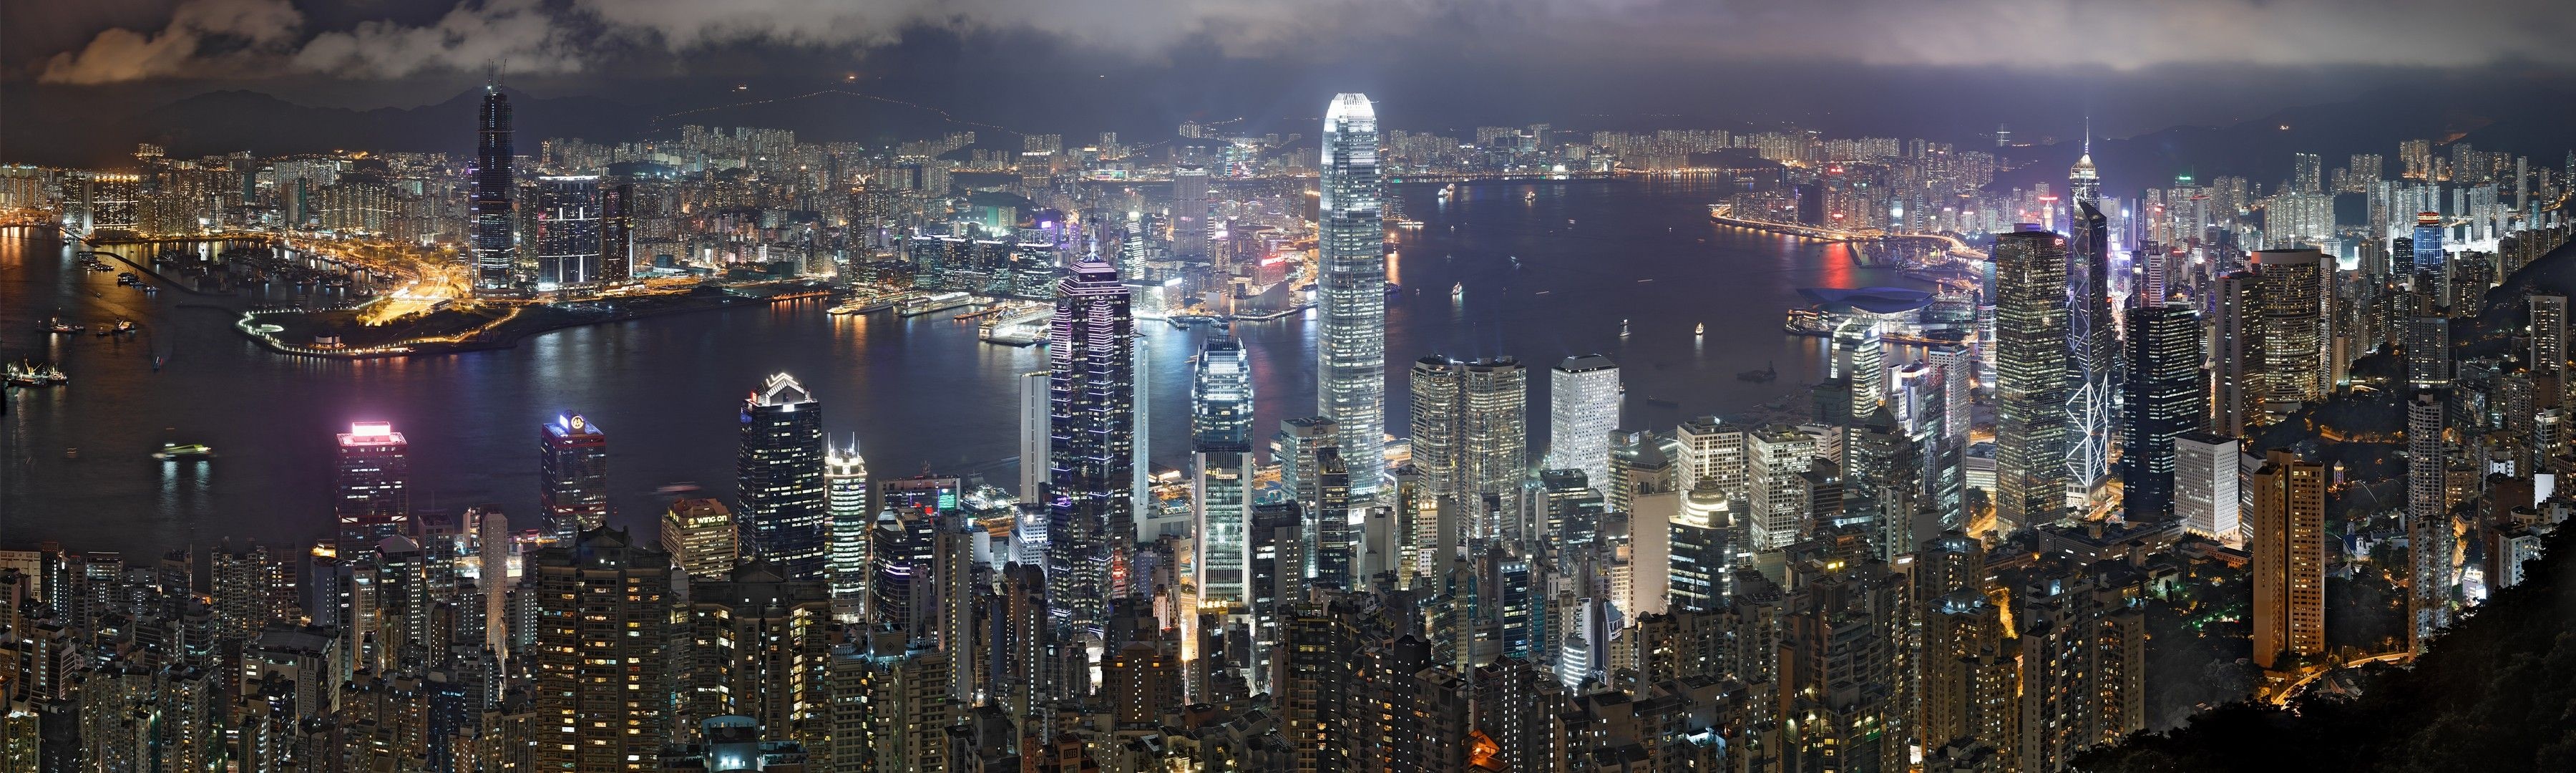 Hong Kong Skyline, Dual monitor wallpapers, Cityscape view, Night lights, 3600x1080 Dual Screen Desktop